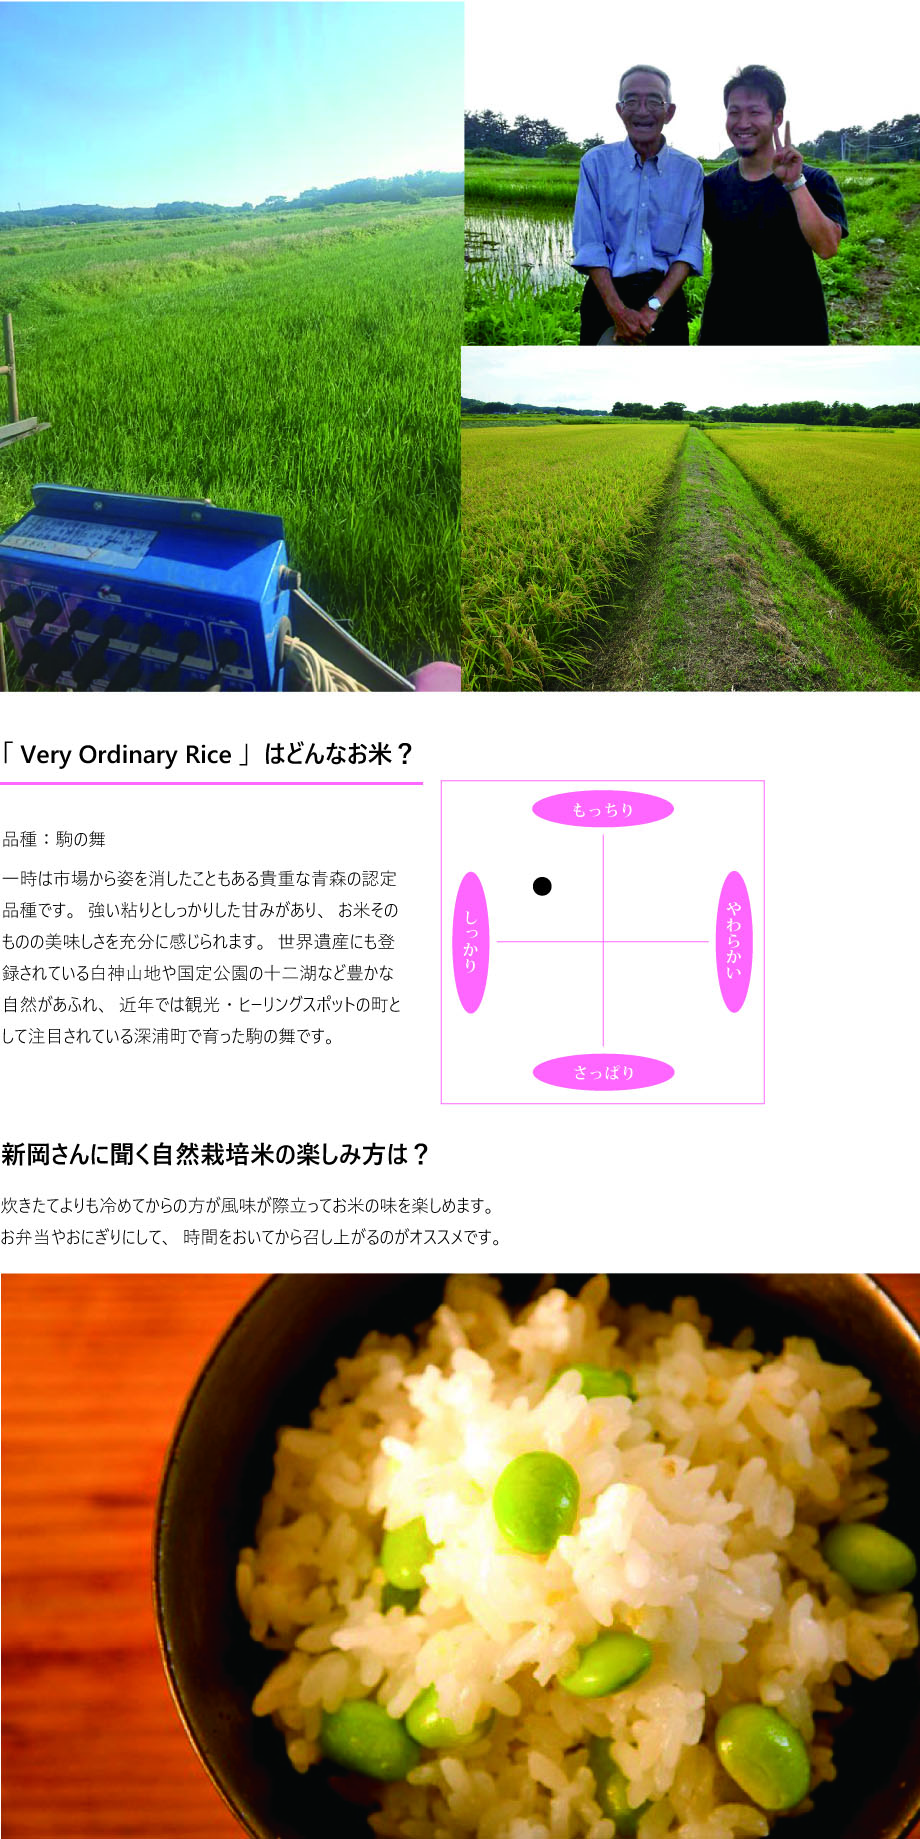 (R03産)Very Ordinary Rice白米5kg